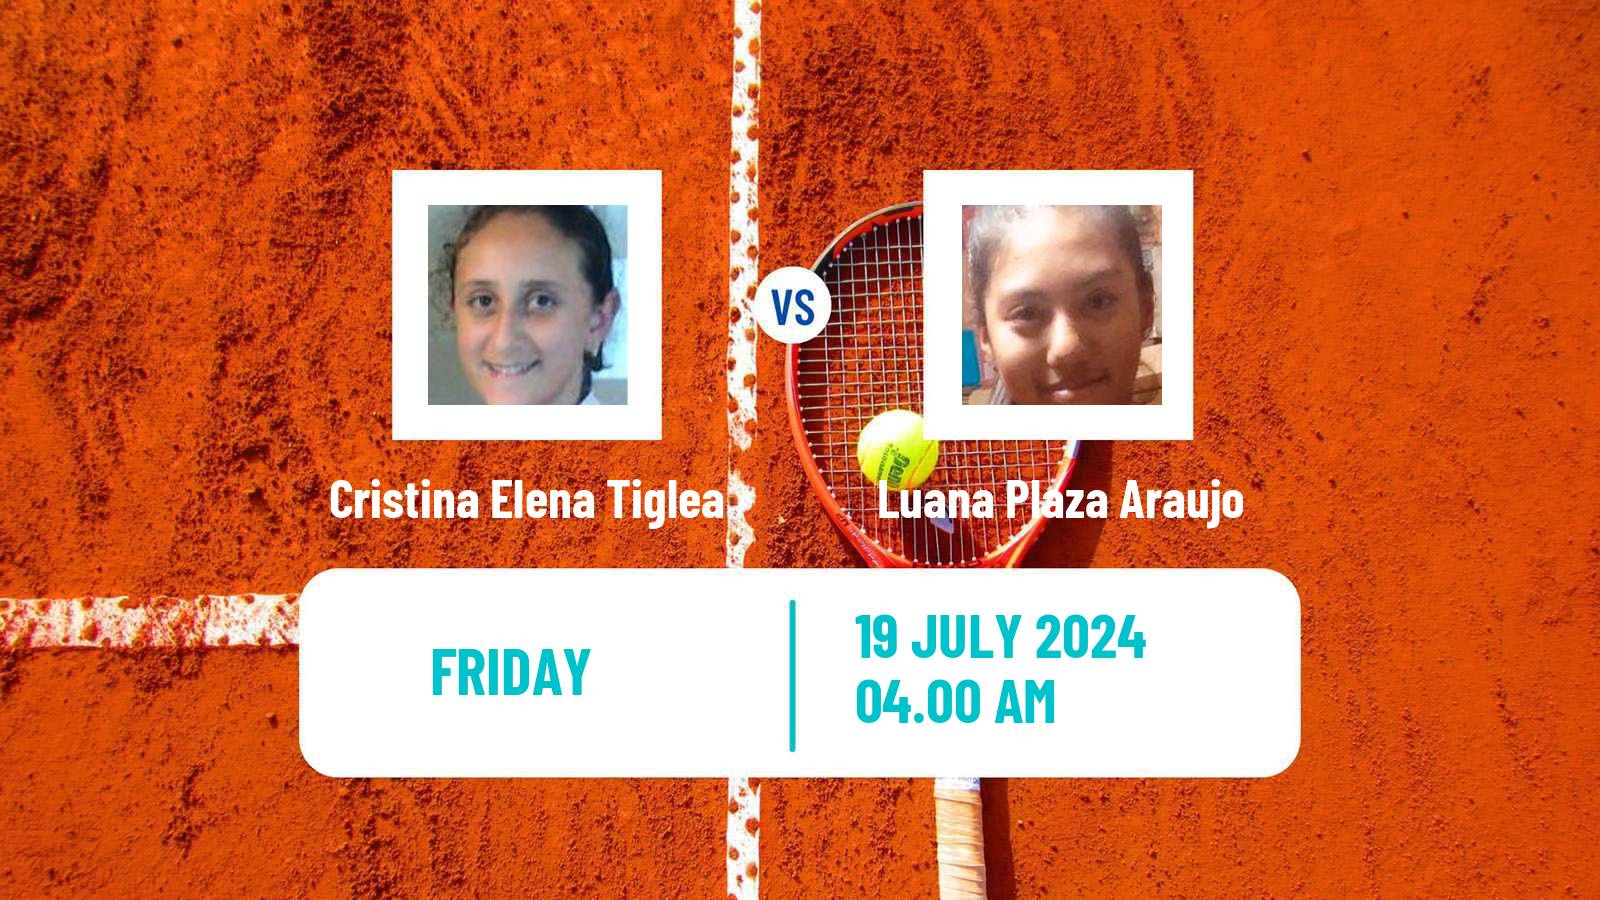 Tennis ITF W15 Monastir 27 Women Cristina Elena Tiglea - Luana Plaza Araujo